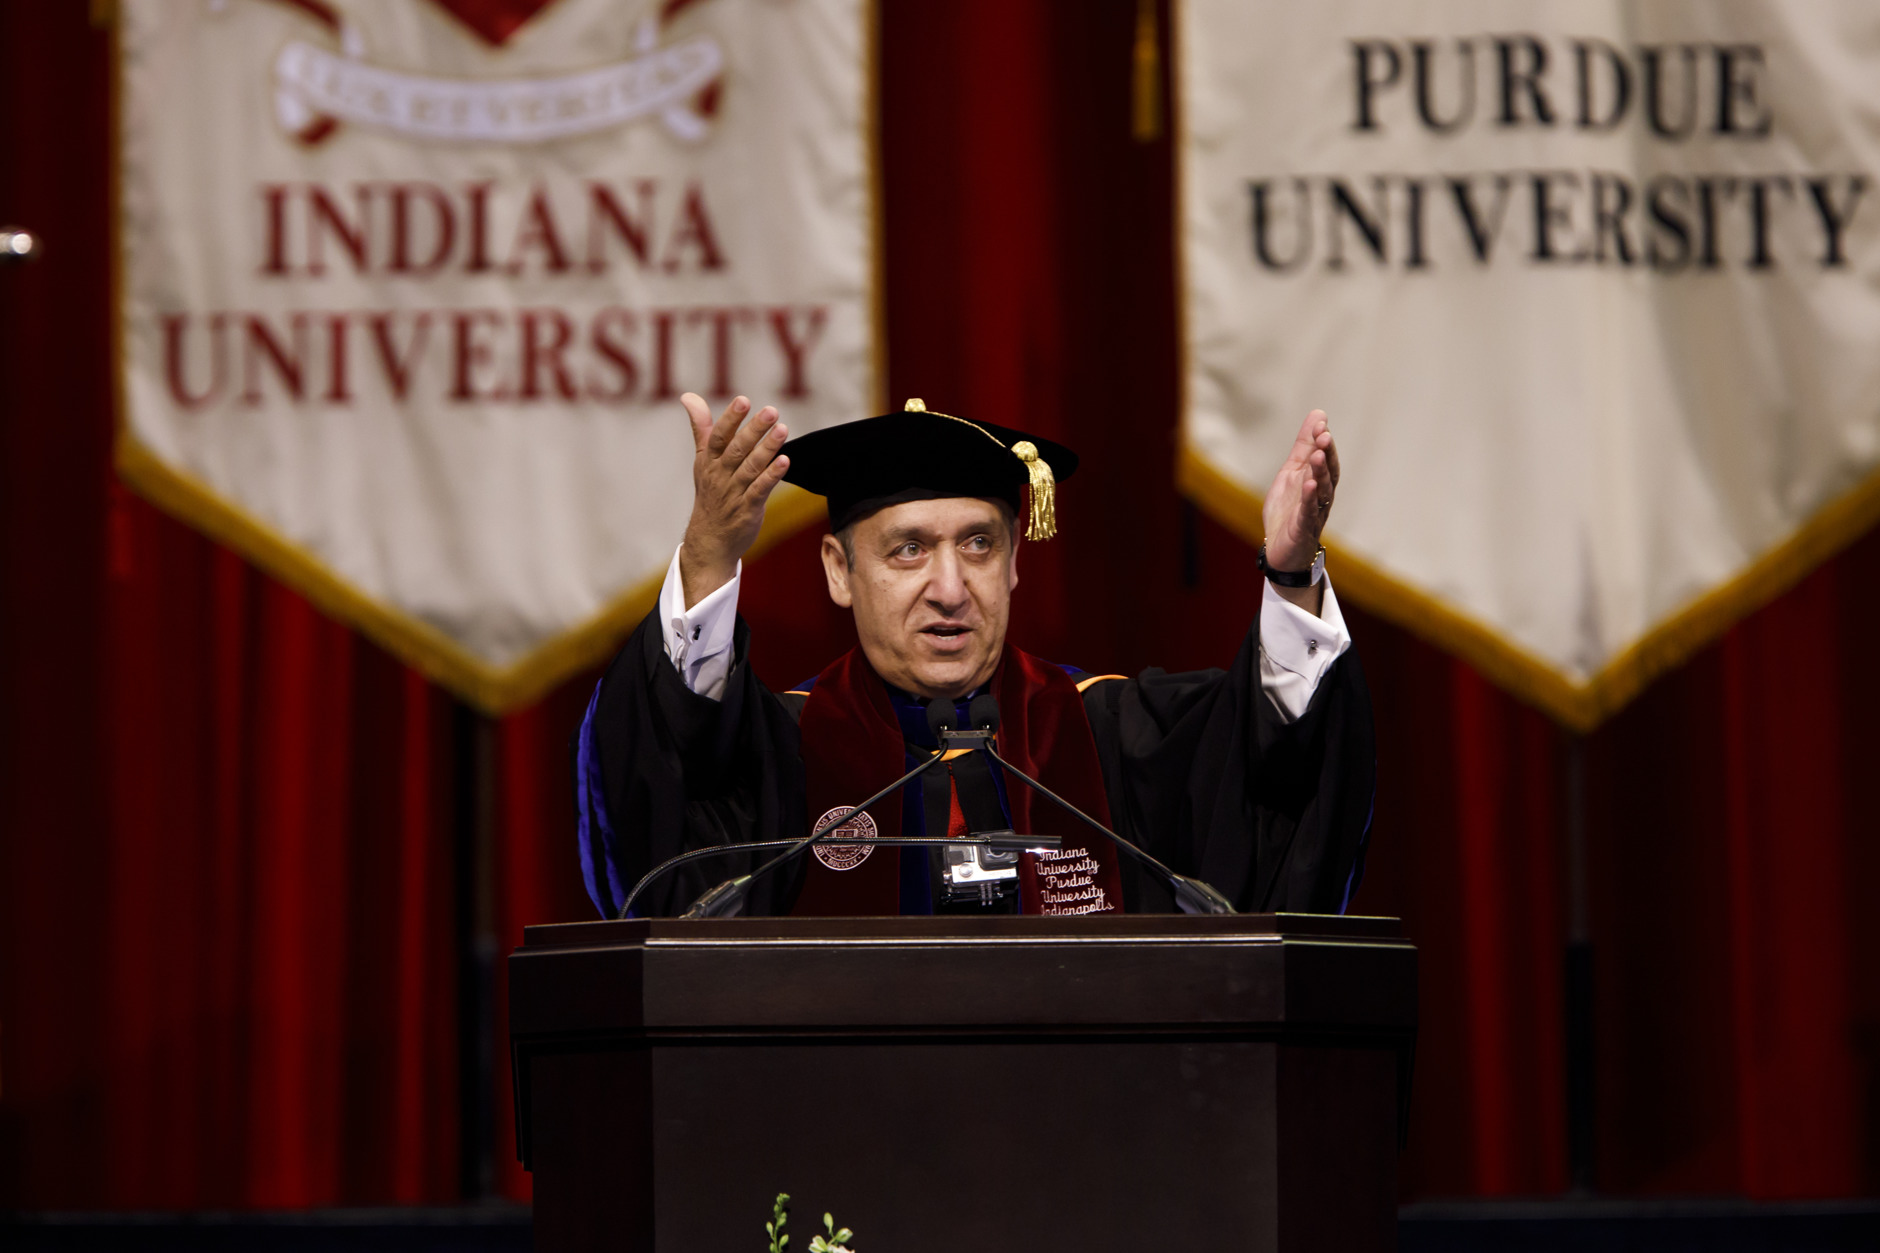 Indiana University-Purdue University Indianapolis Commencement